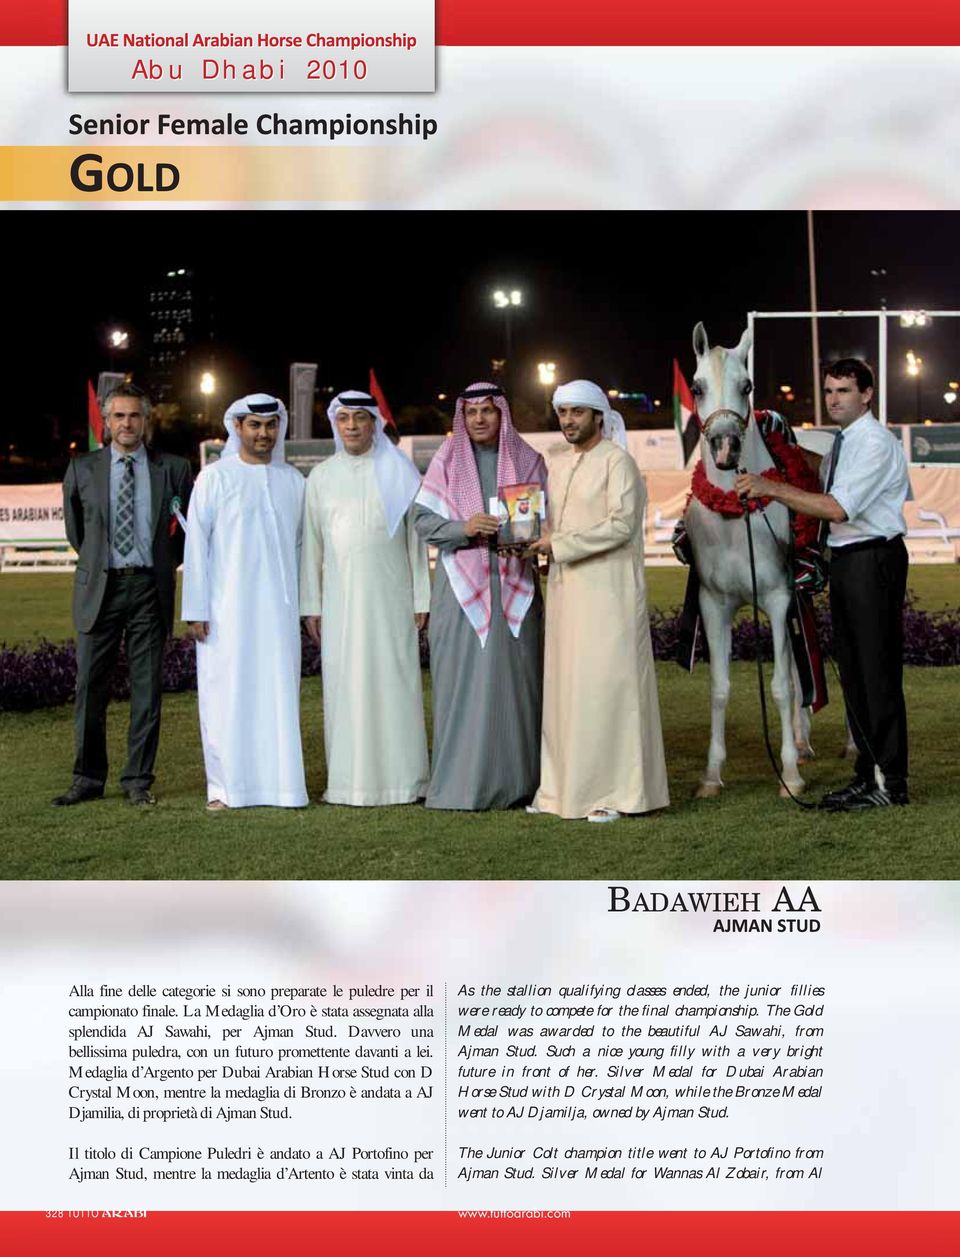 Medaglia d Argento per Dubai Arabian Horse Stud con D Crystal Moon, mentre la medaglia di Bronzo è andata a AJ Djamilia, di proprietà di Ajman Stud.